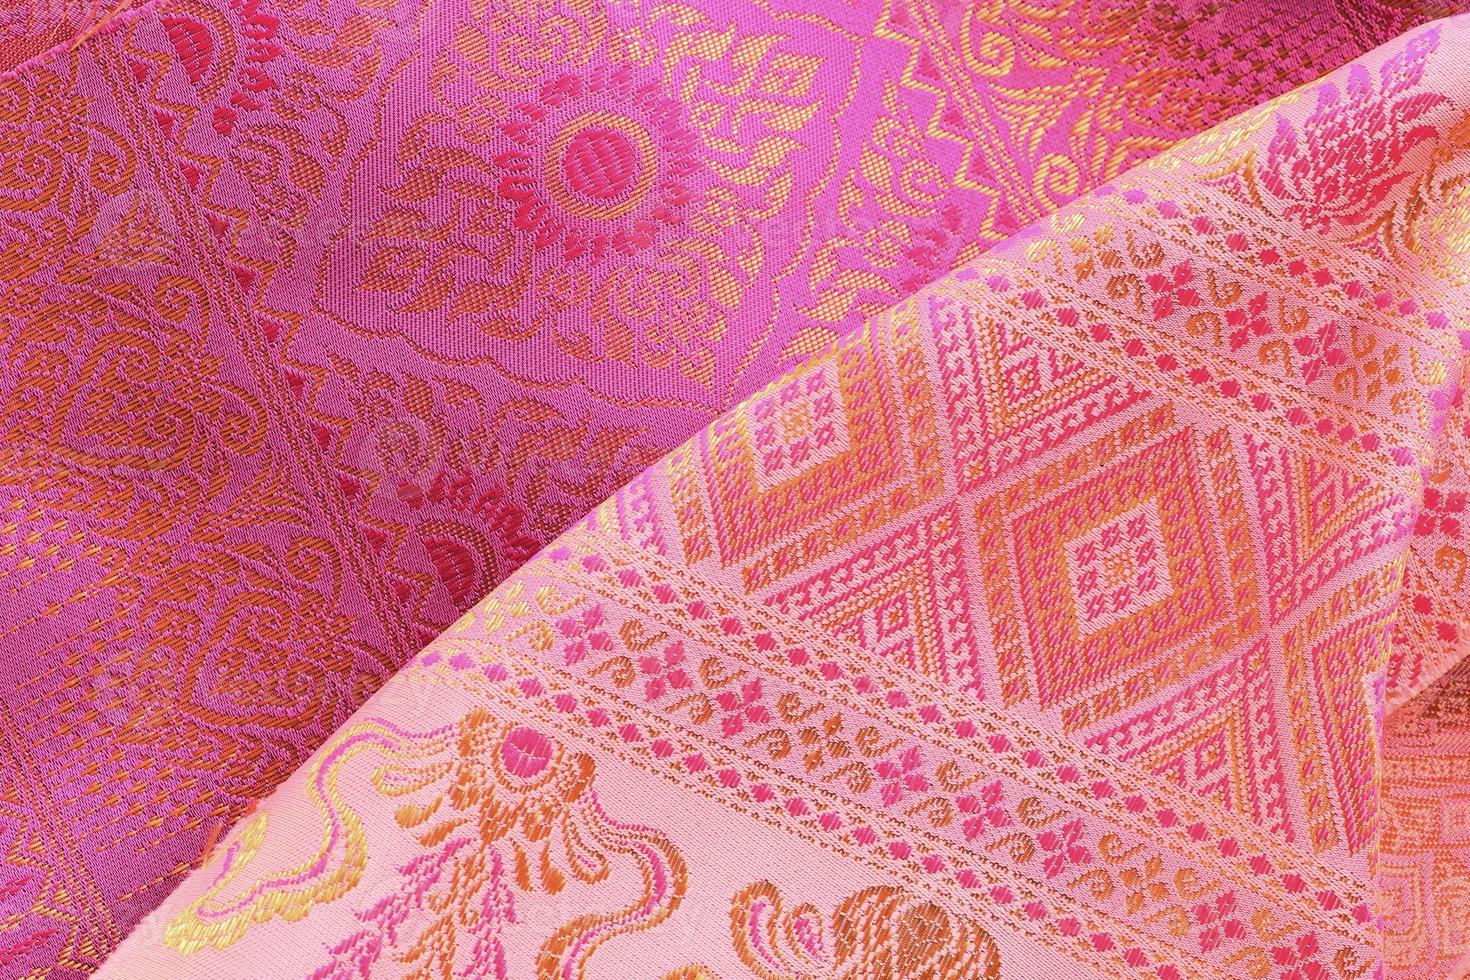 textil asiático antiguo foto